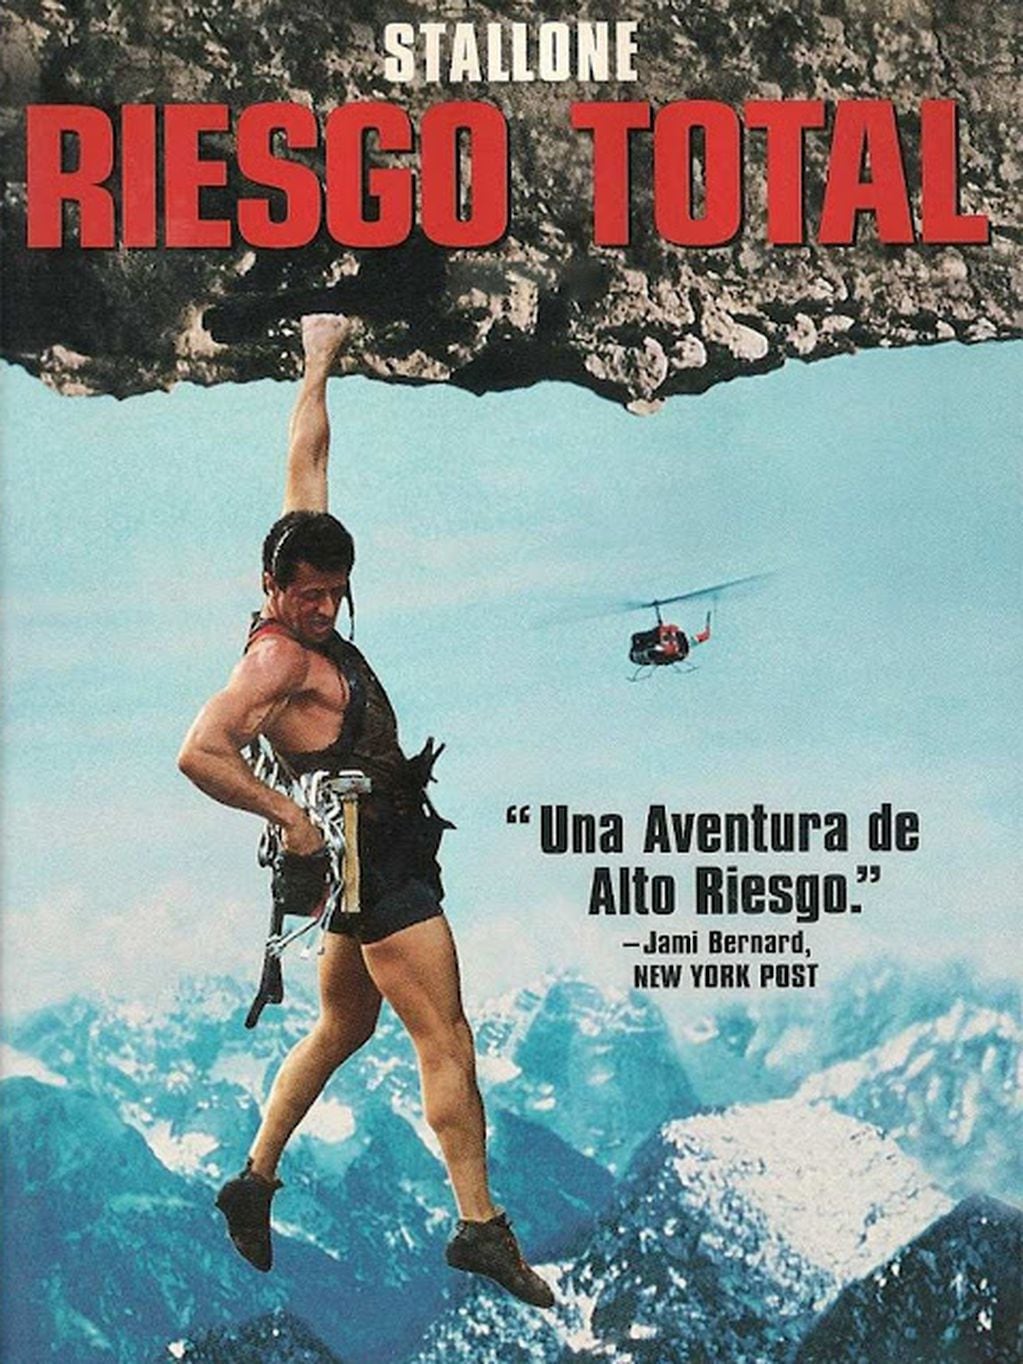 “Riesgo total” (Cliffhanger, 1993)